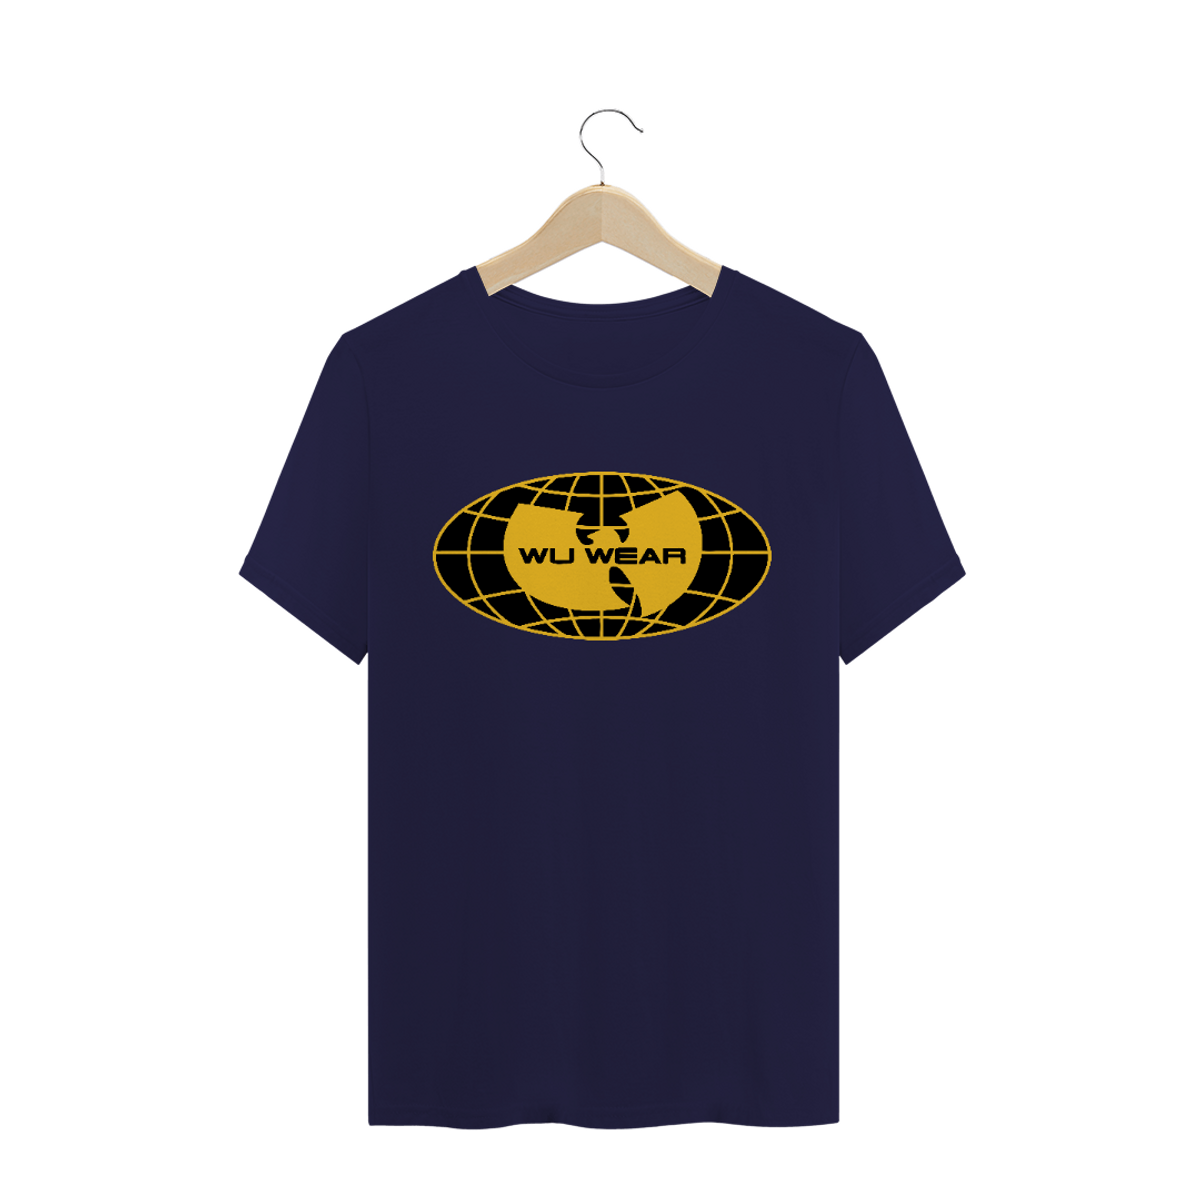 Nome do produto: Camiseta de Malha Quality Wu Tang Clan Wu Wear Globo Amarelo